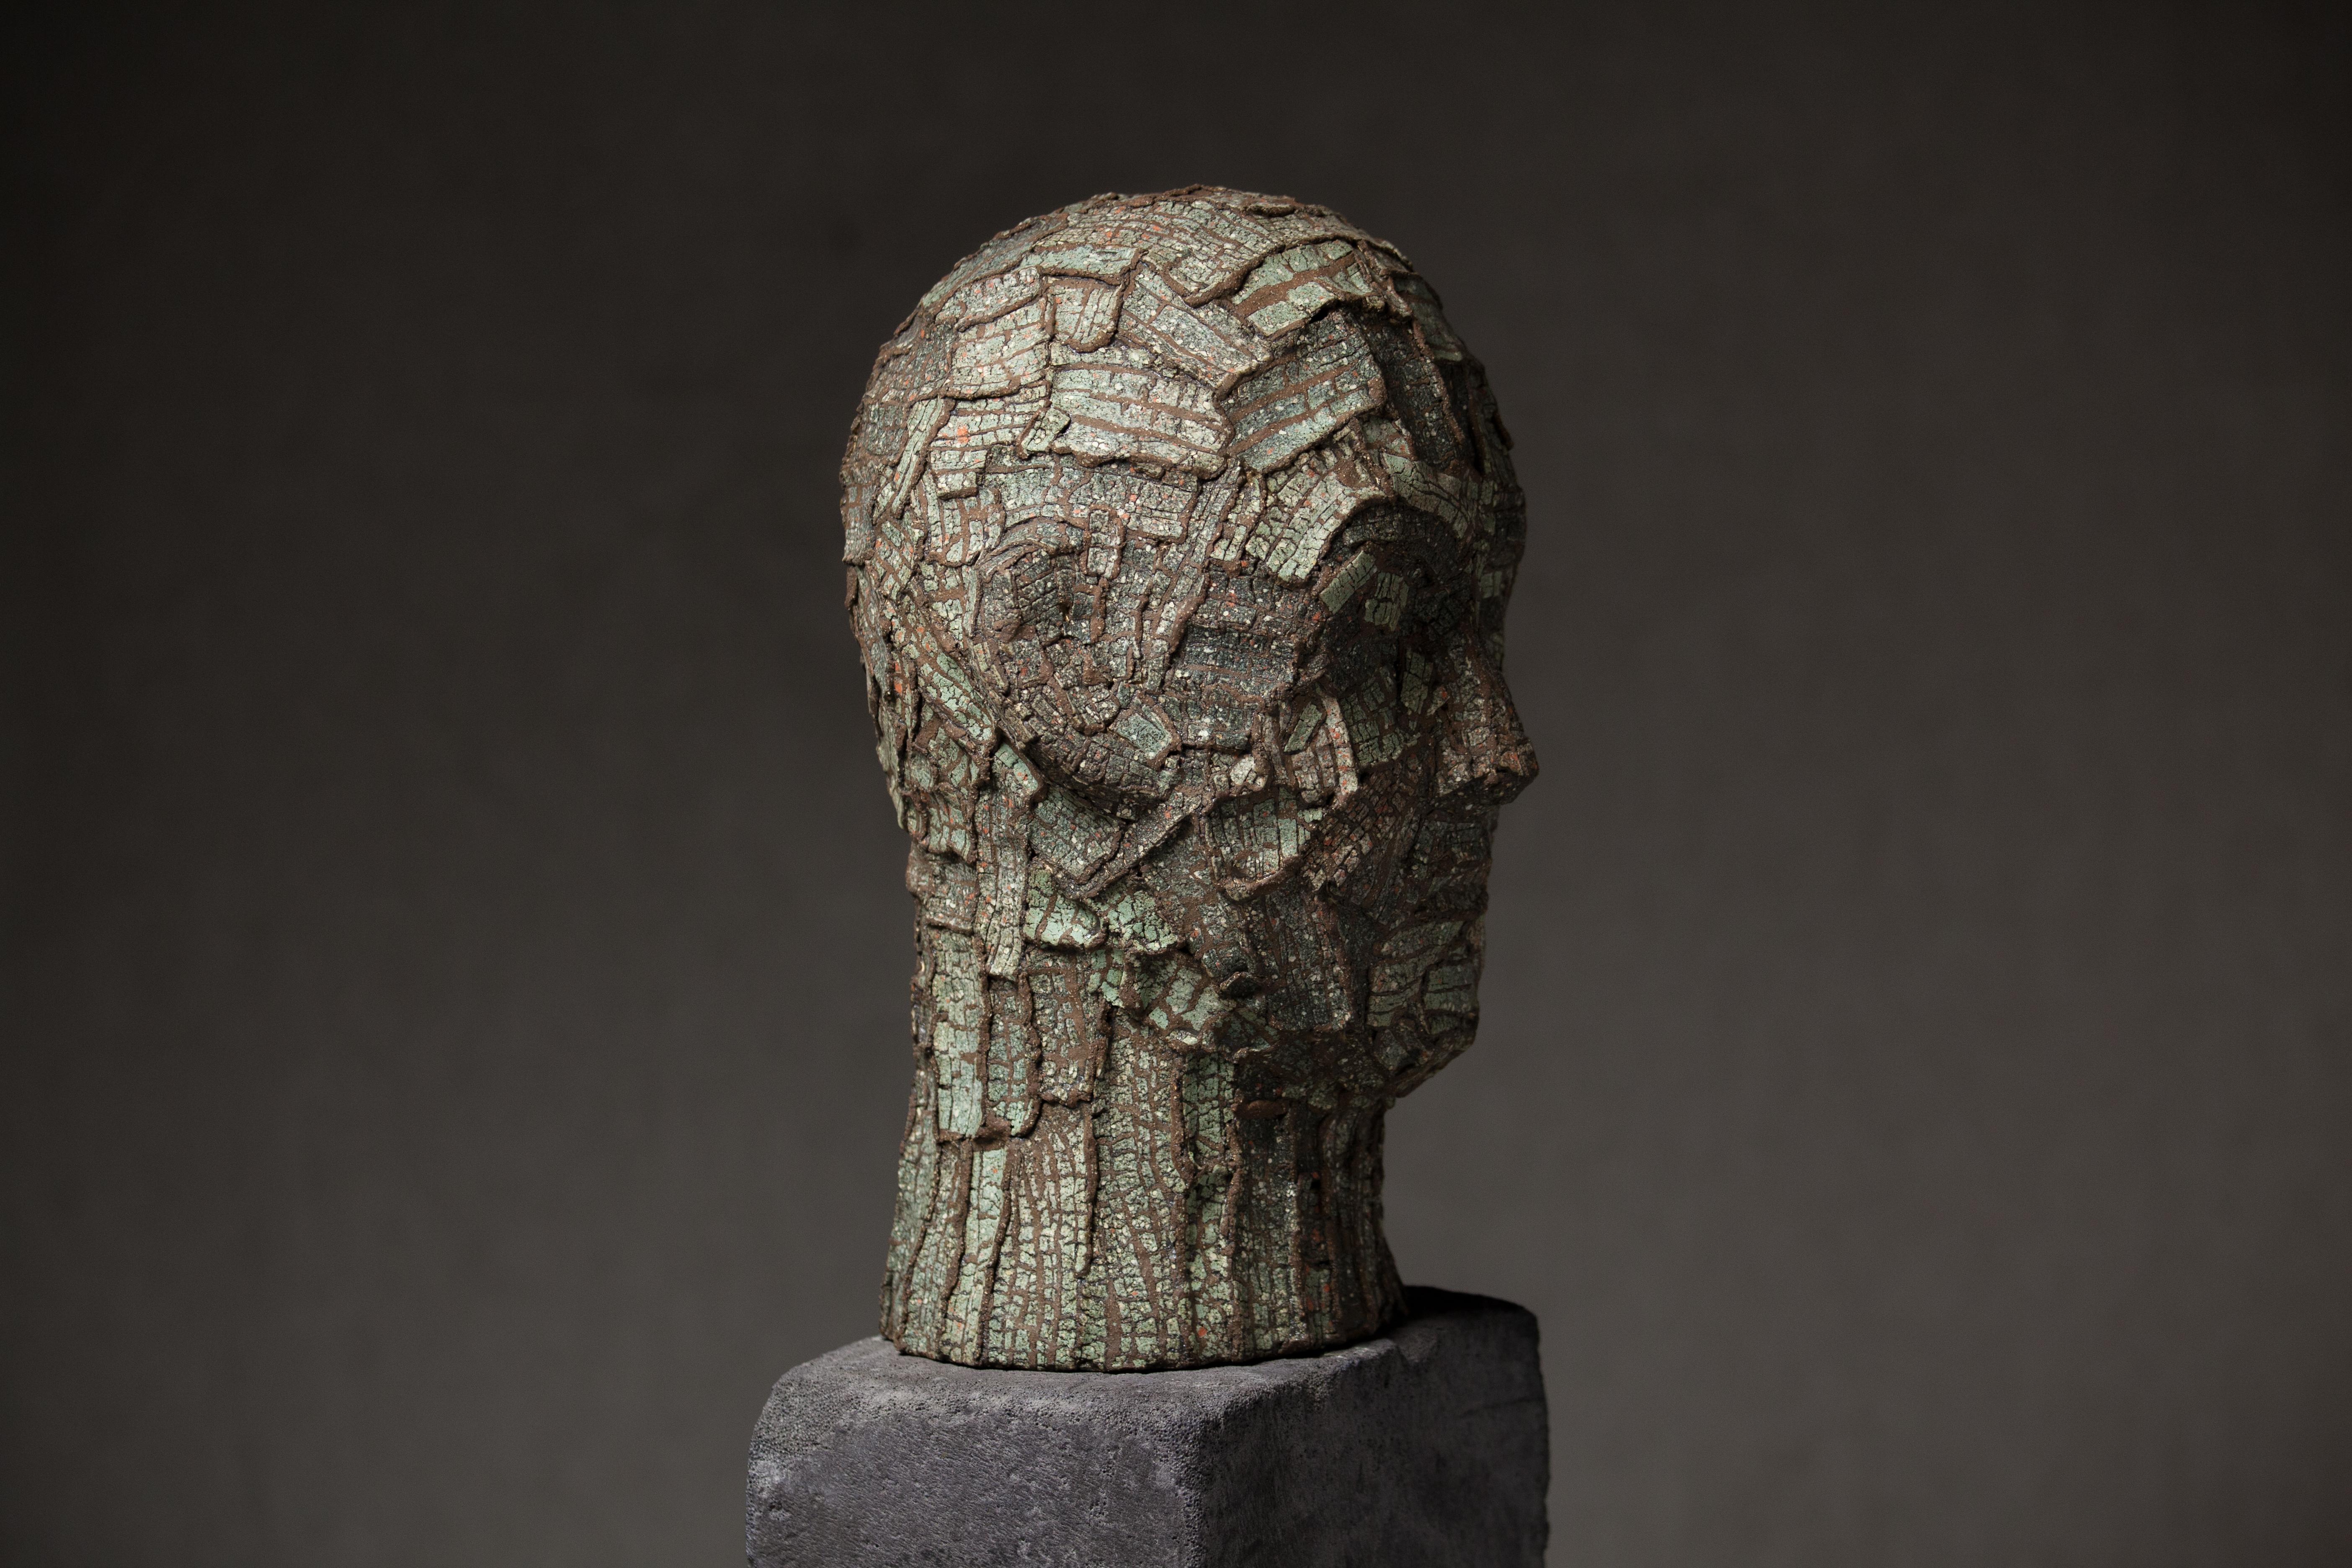 clay head sculptures